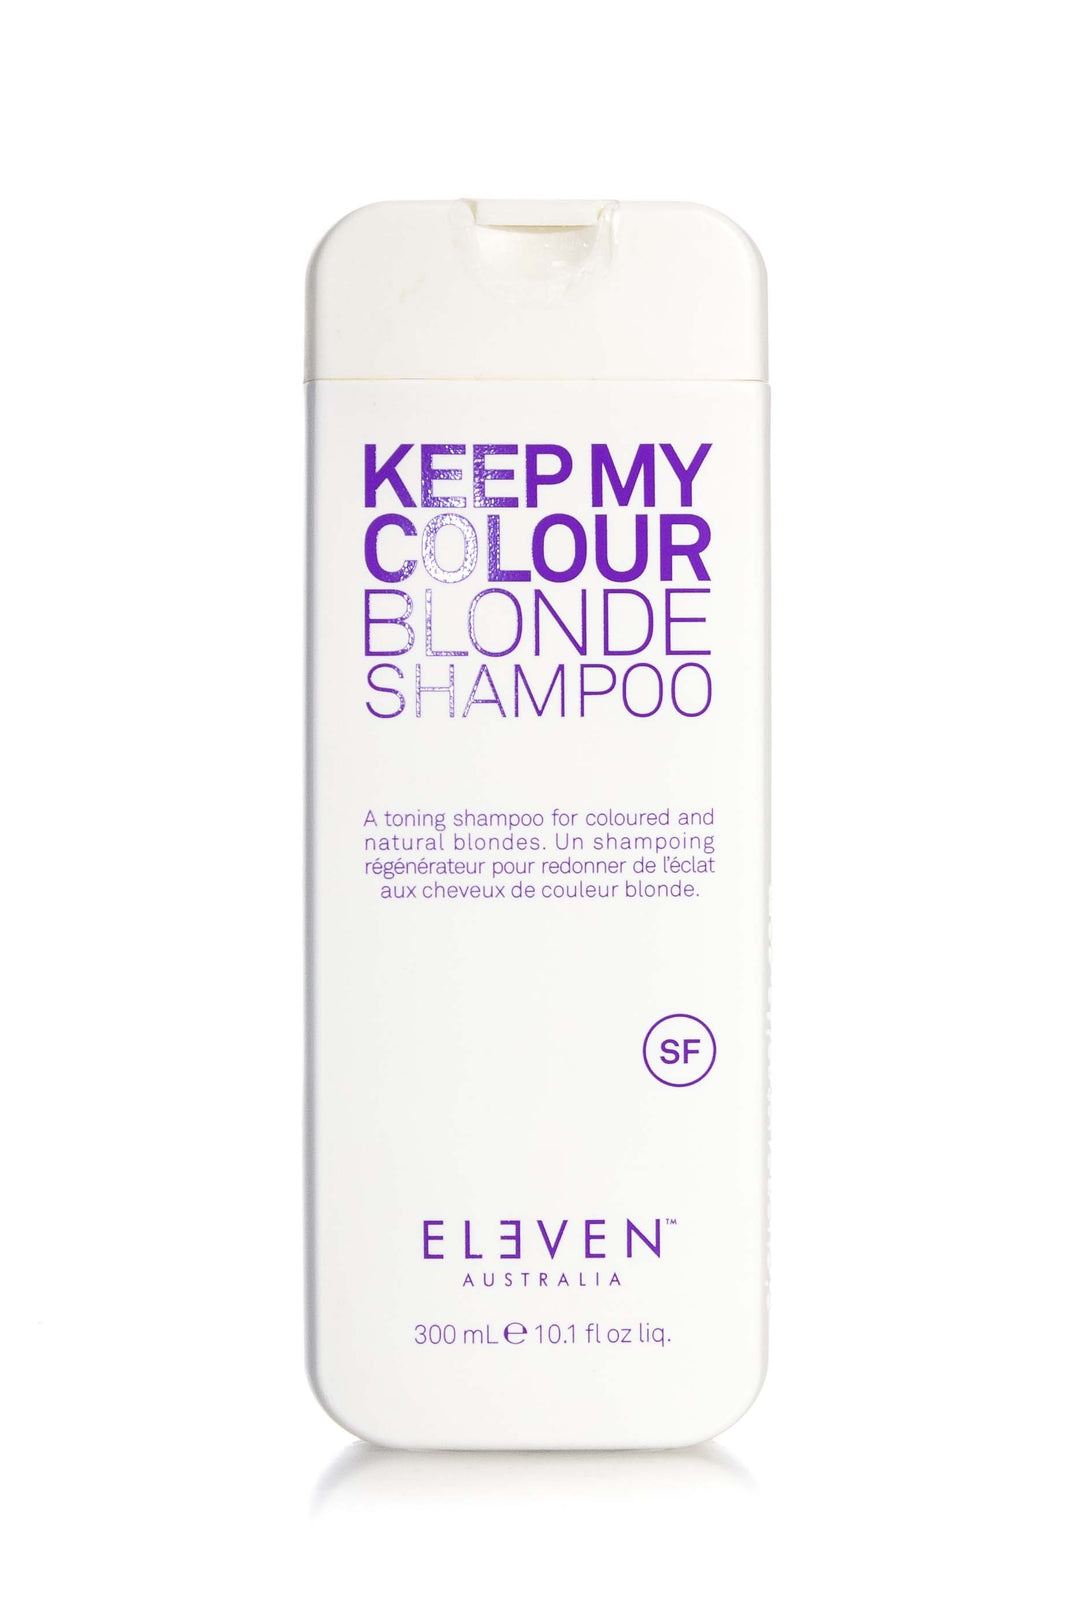 Eleven Keep My Colour Blonde Shampoo